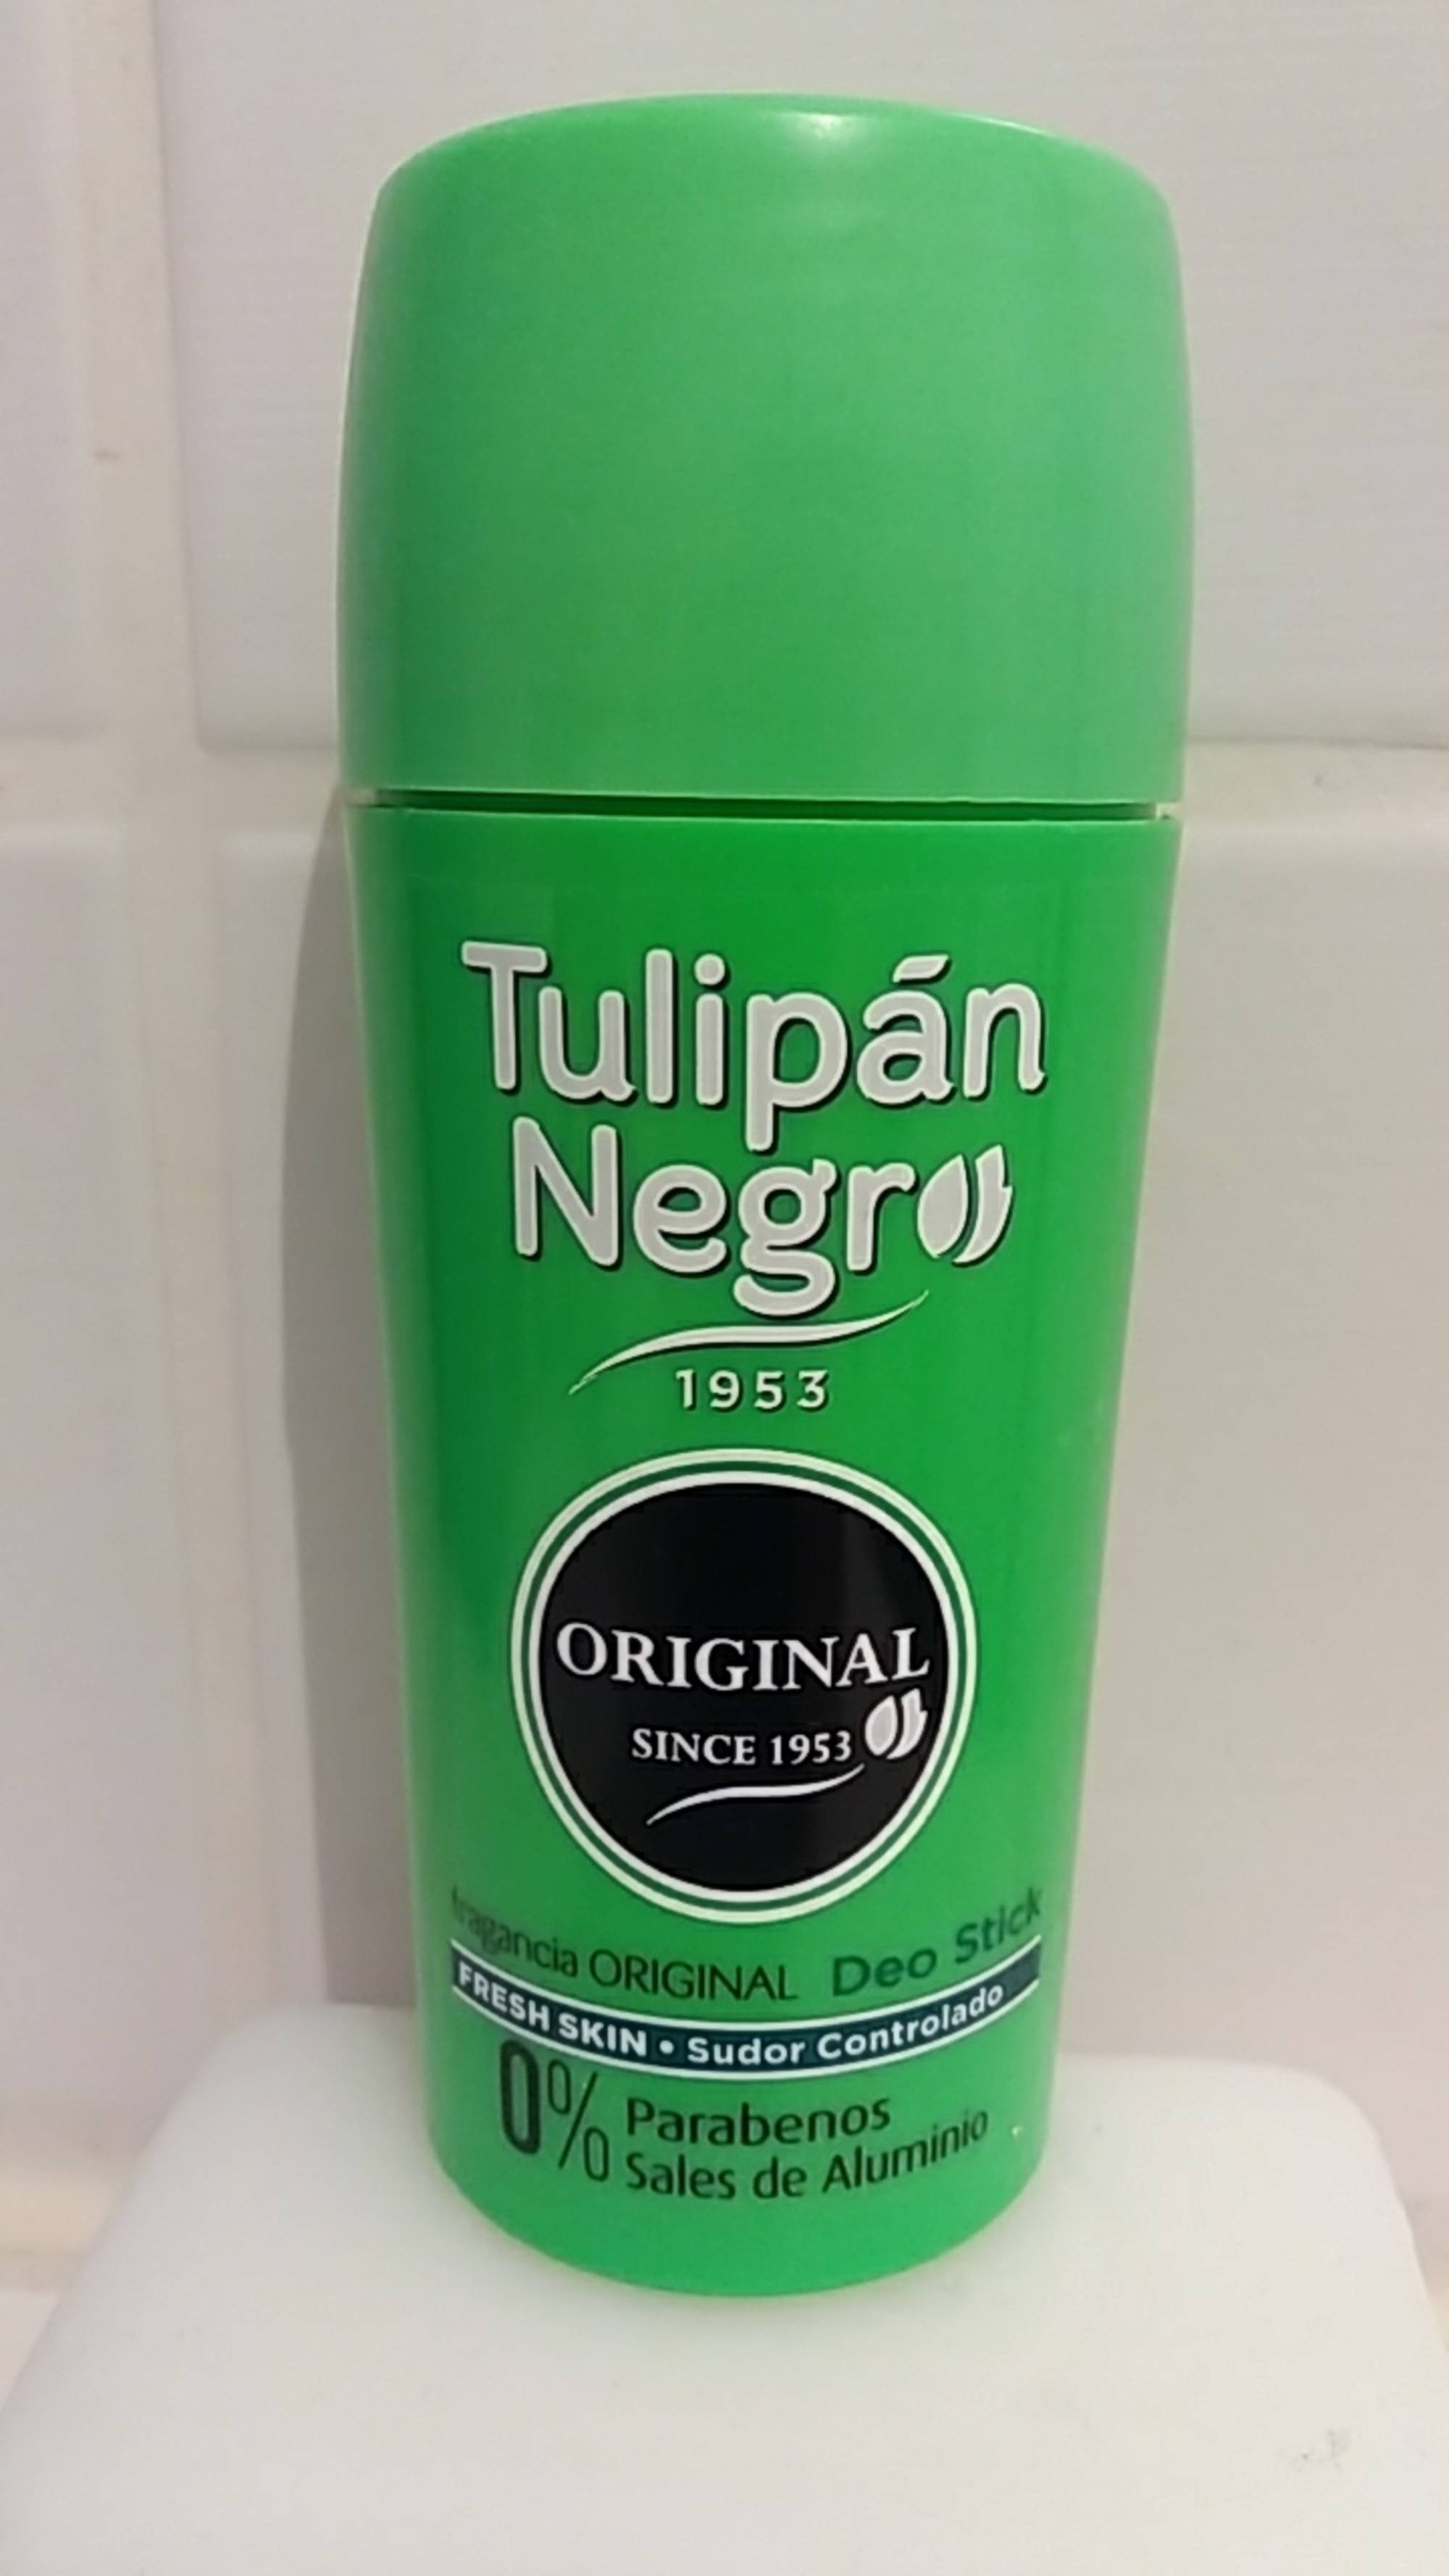 TULIPÁN NEGRO - Original - Deo stick